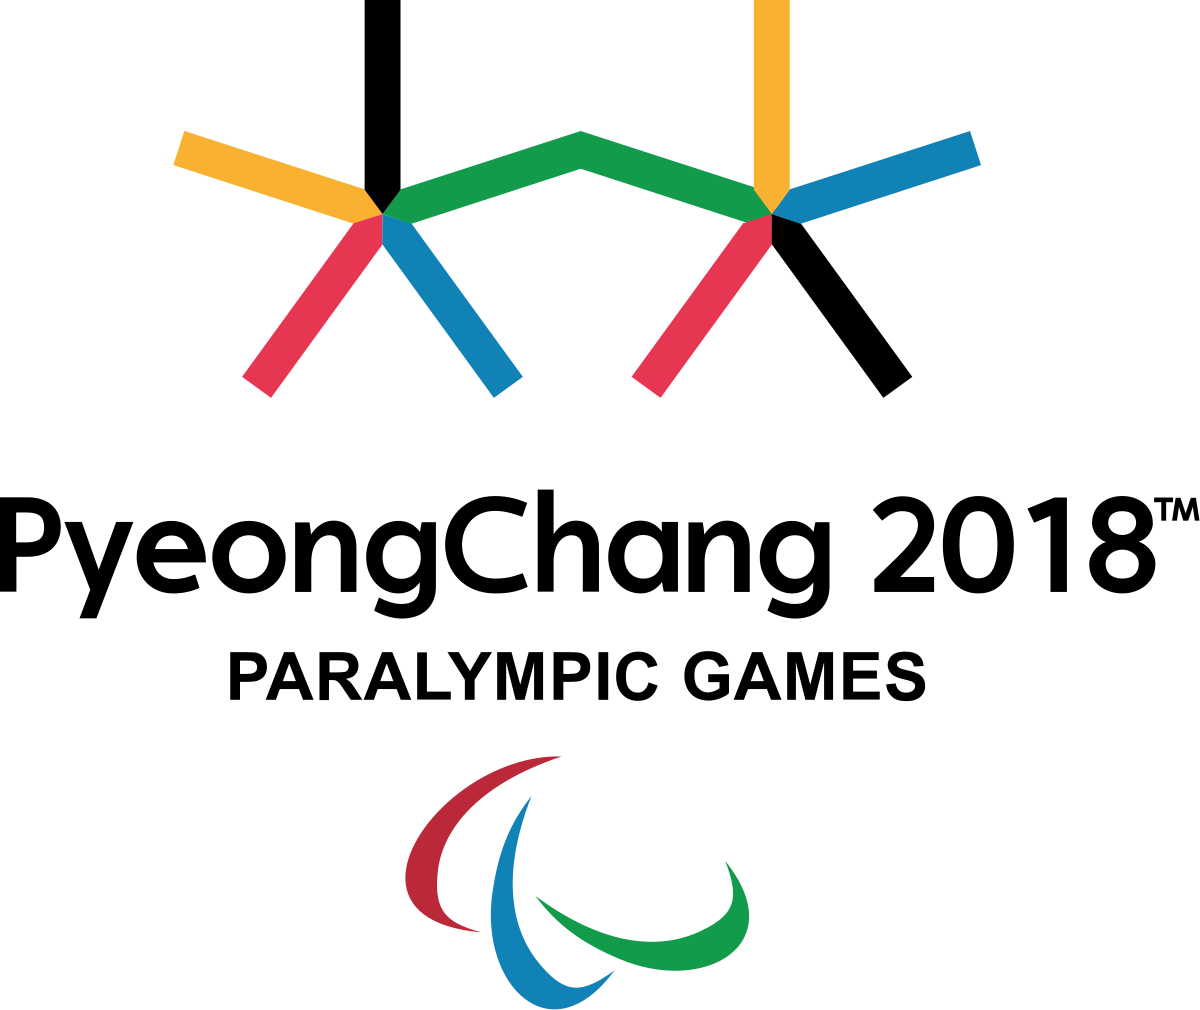 Logo Londres 2012